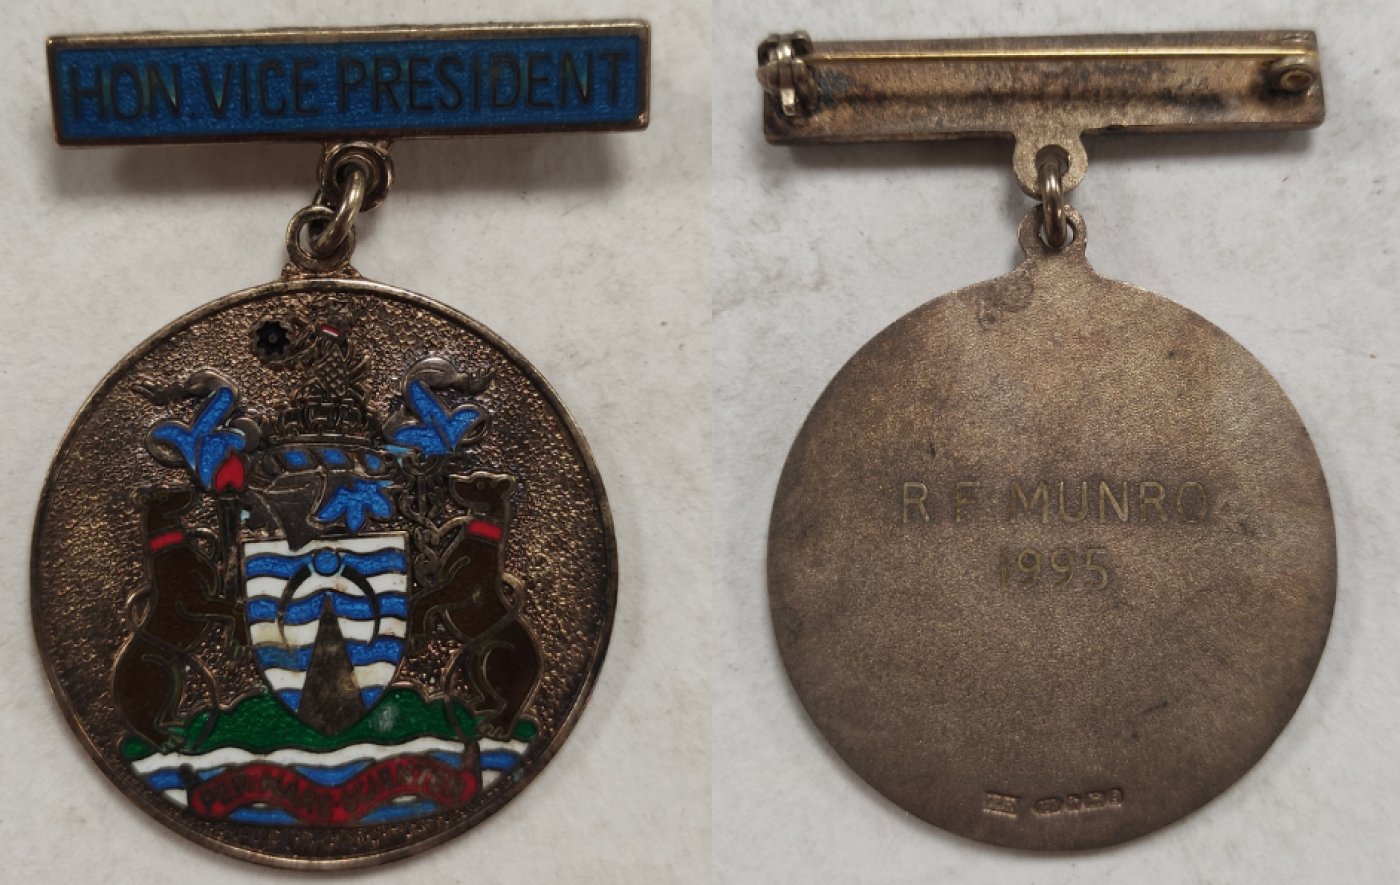 vice president badge